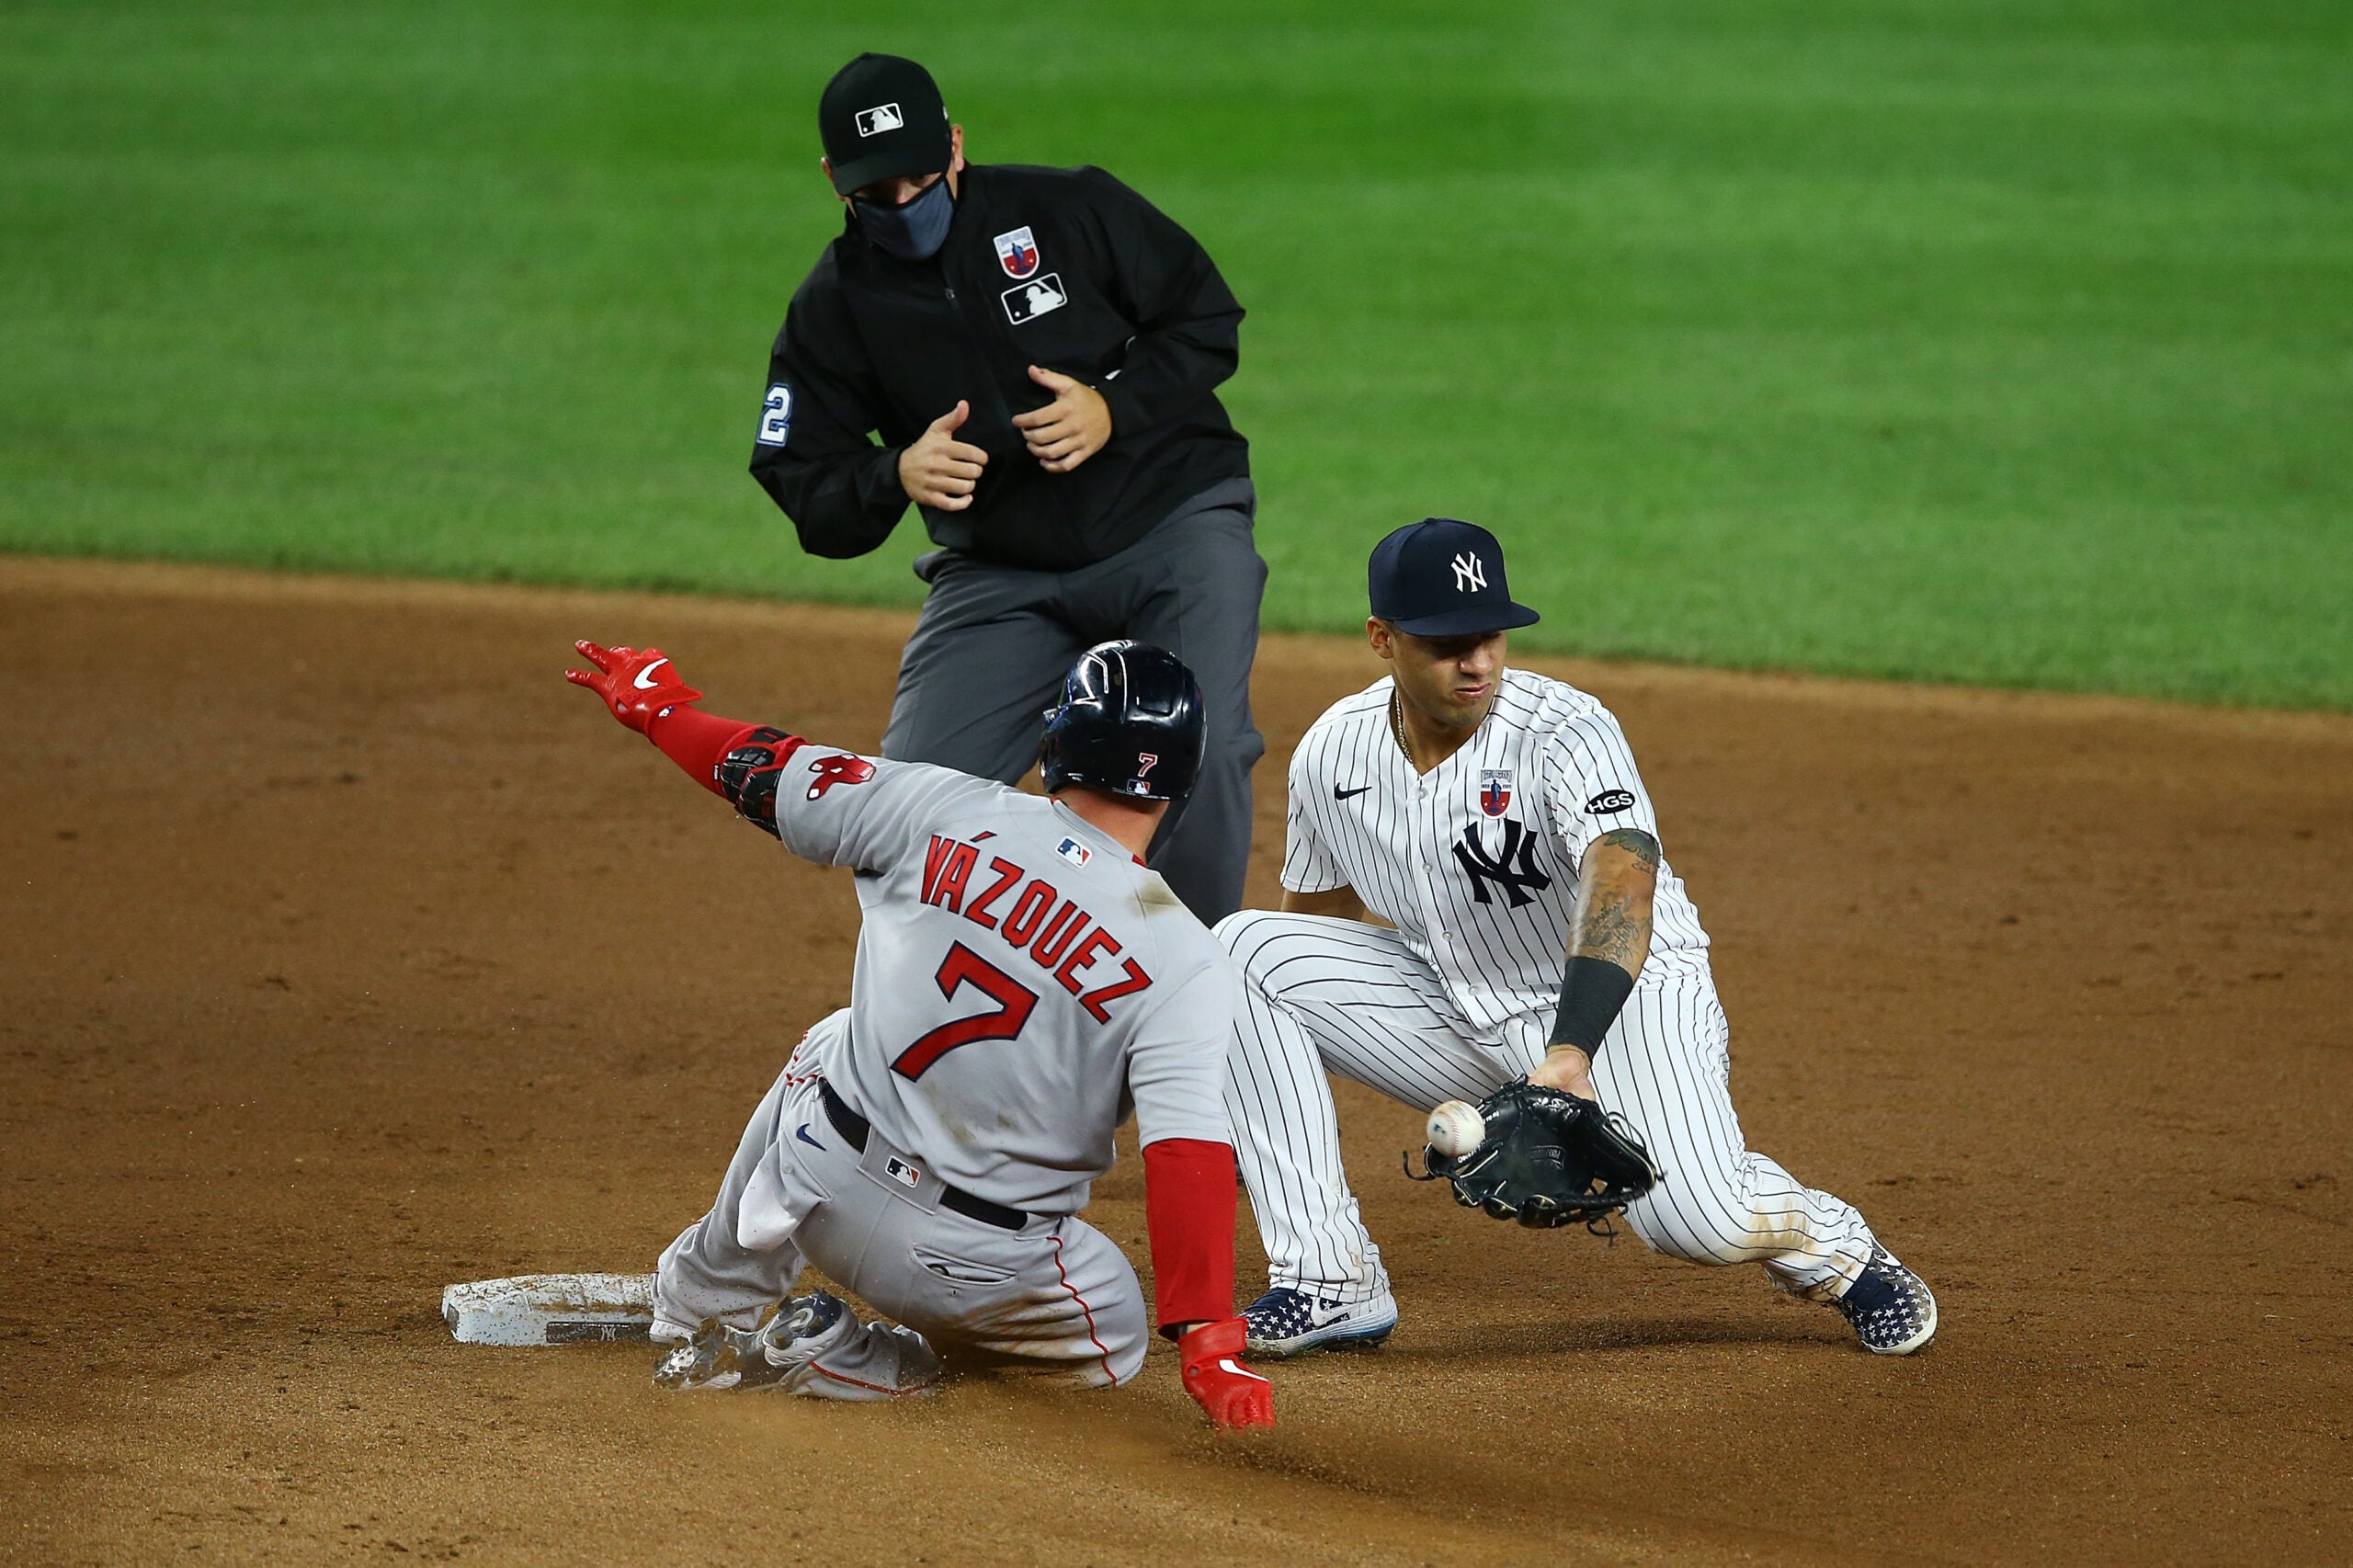 Morning sports update: Christian Vazquez had a World Series retort